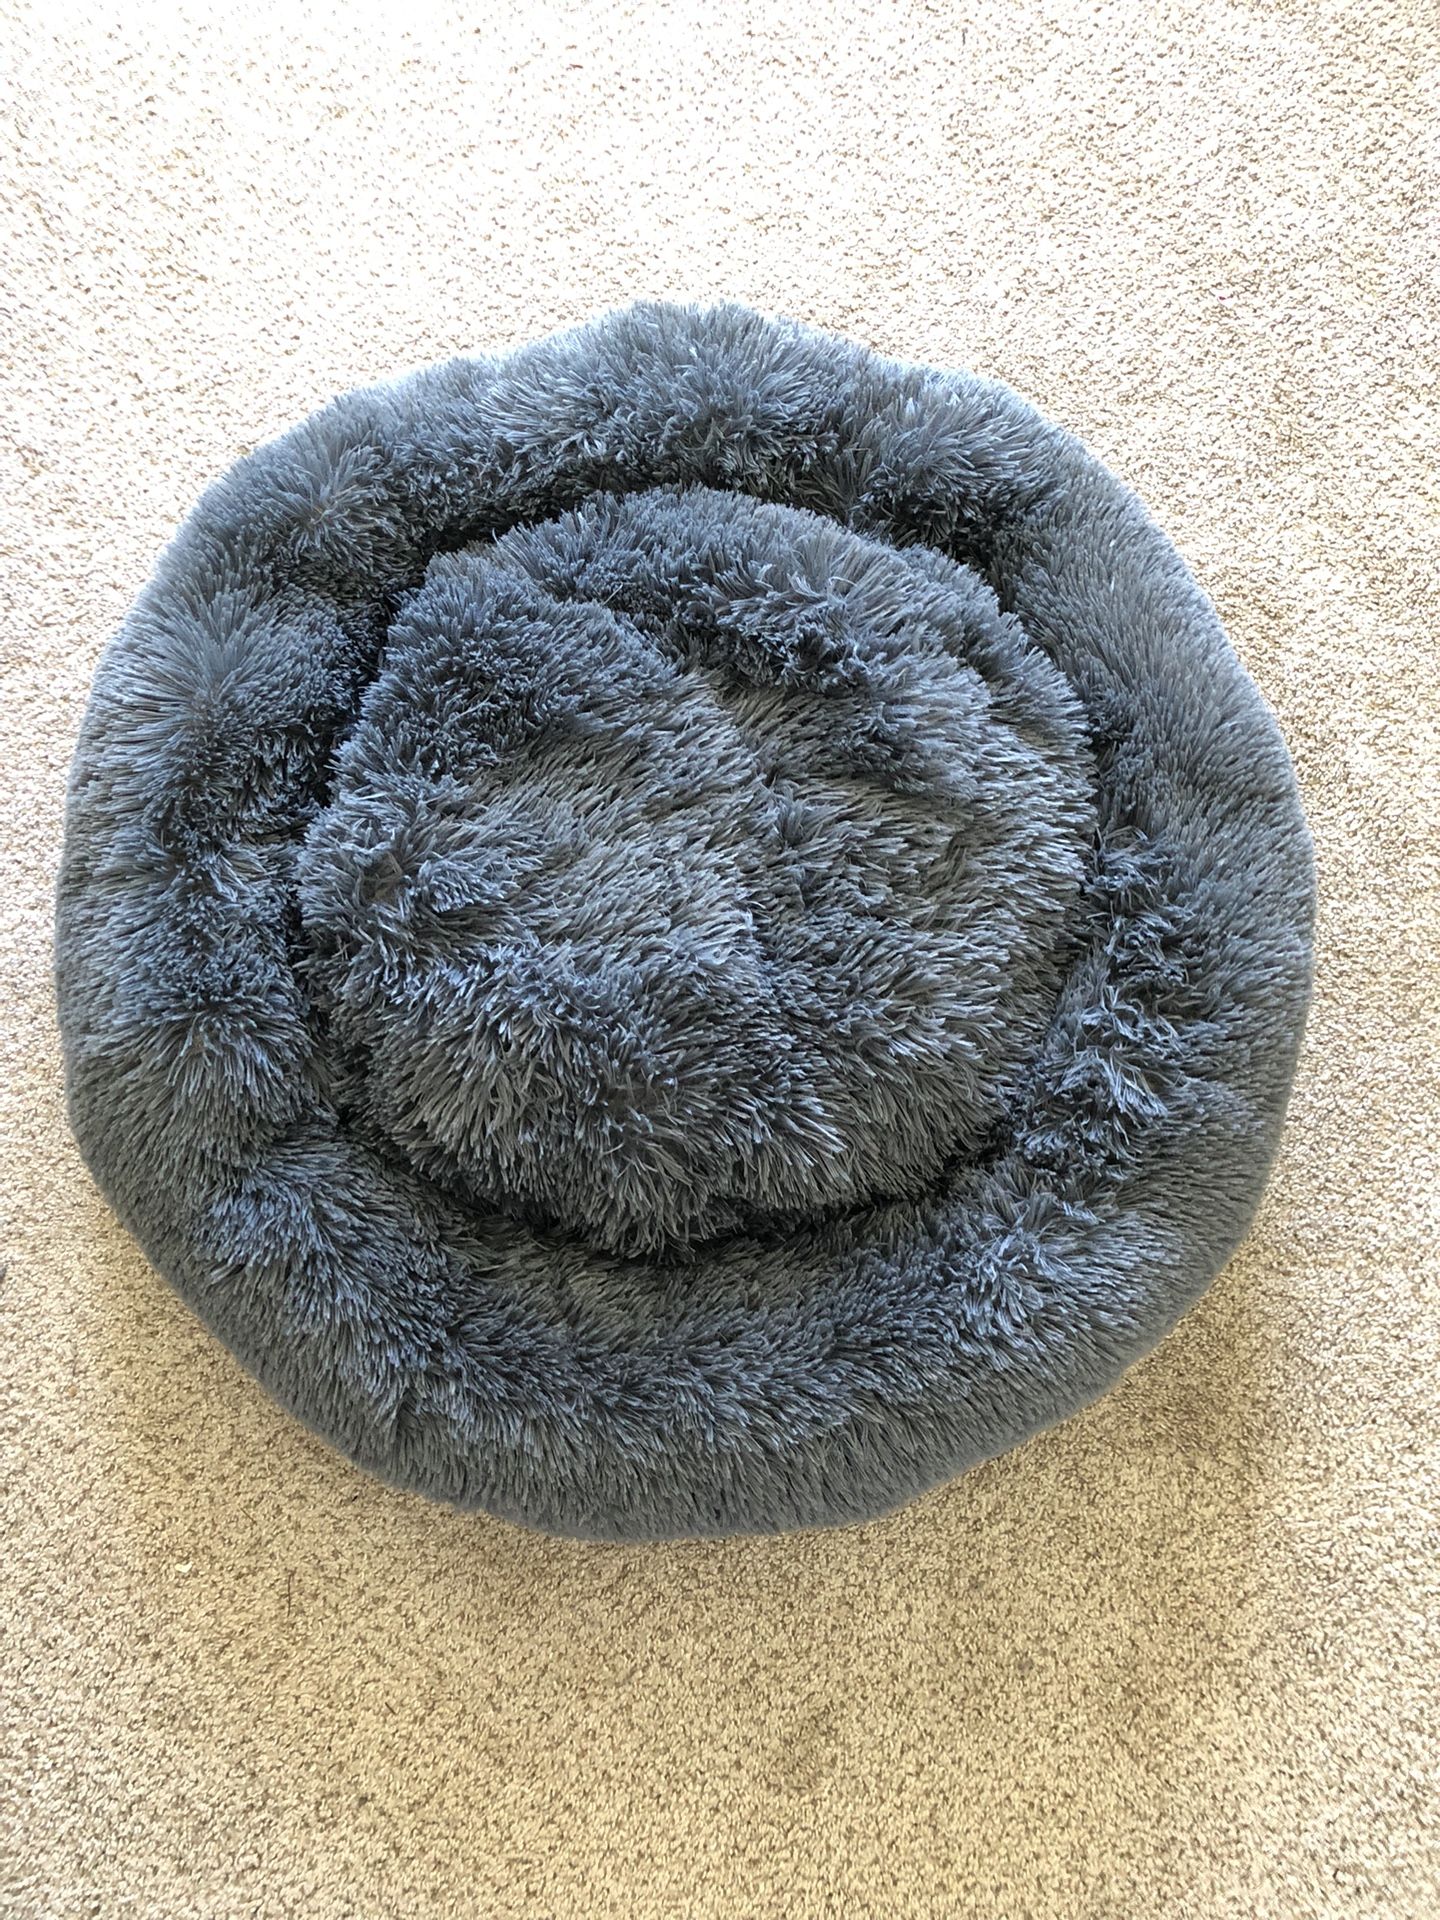 Gray round pet bed  L“30x W “30